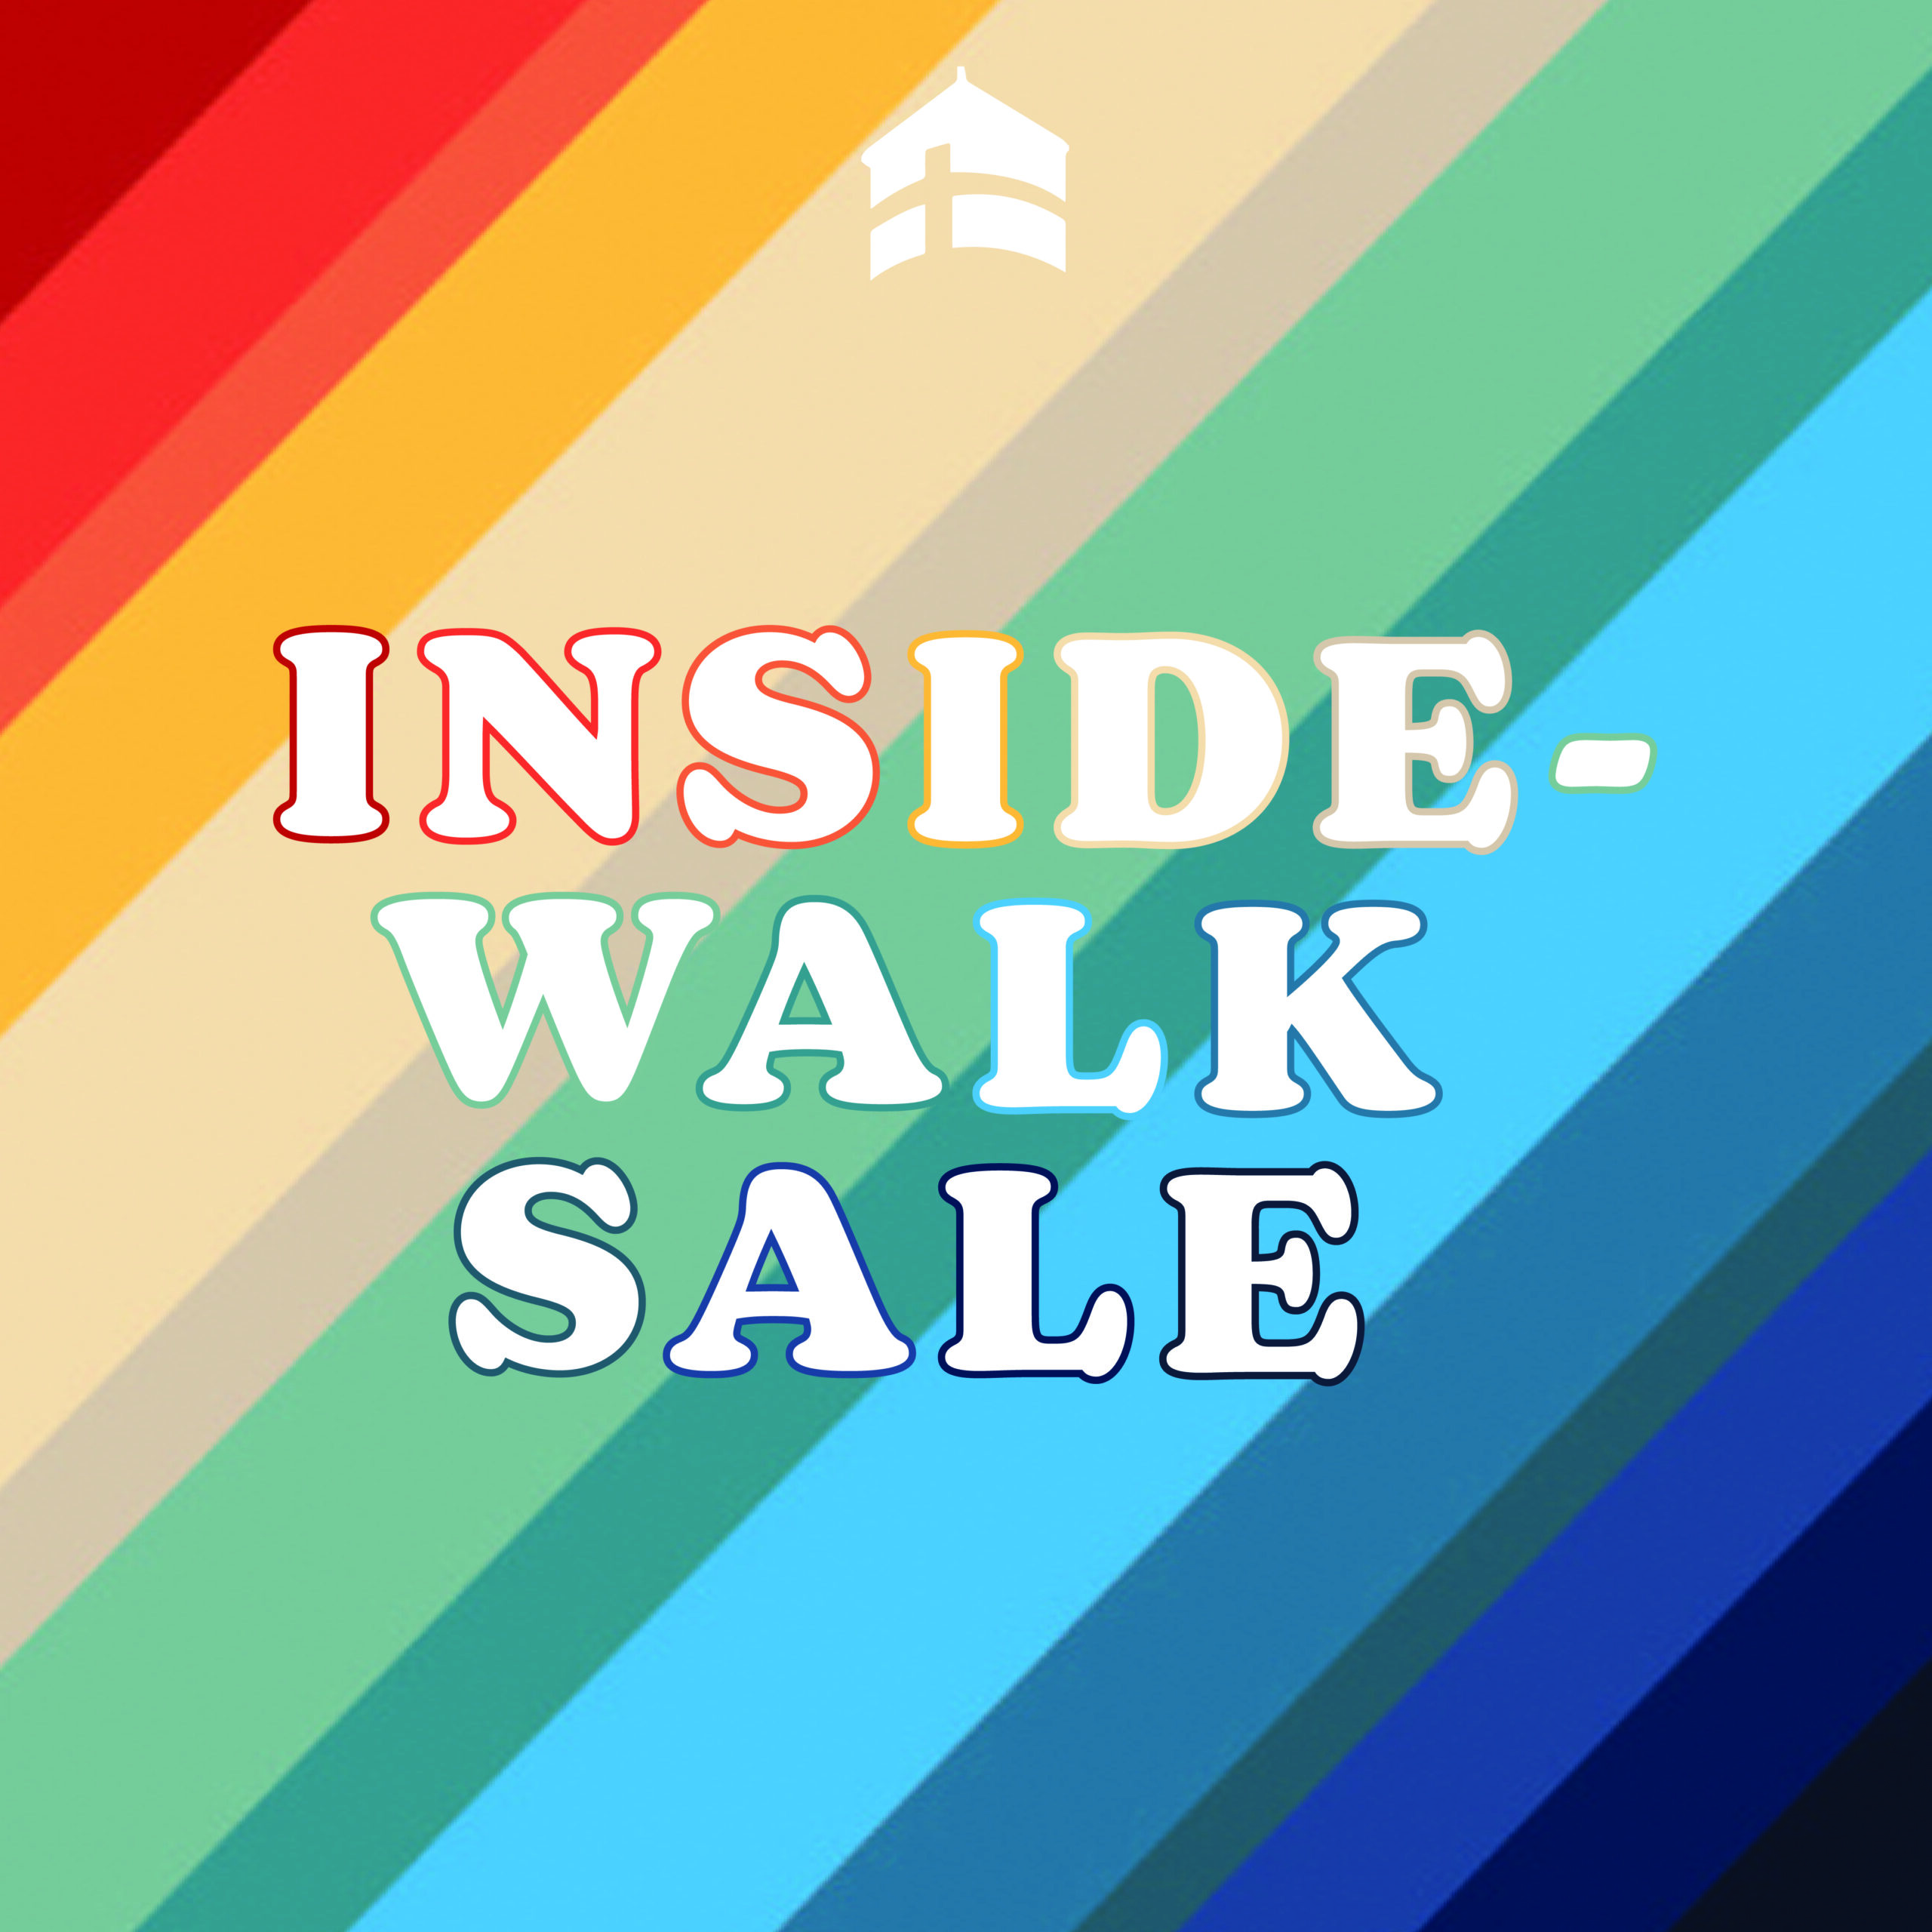 https://andersonville.org/wp-content/uploads/inside-walk-sale-scaled.jpg